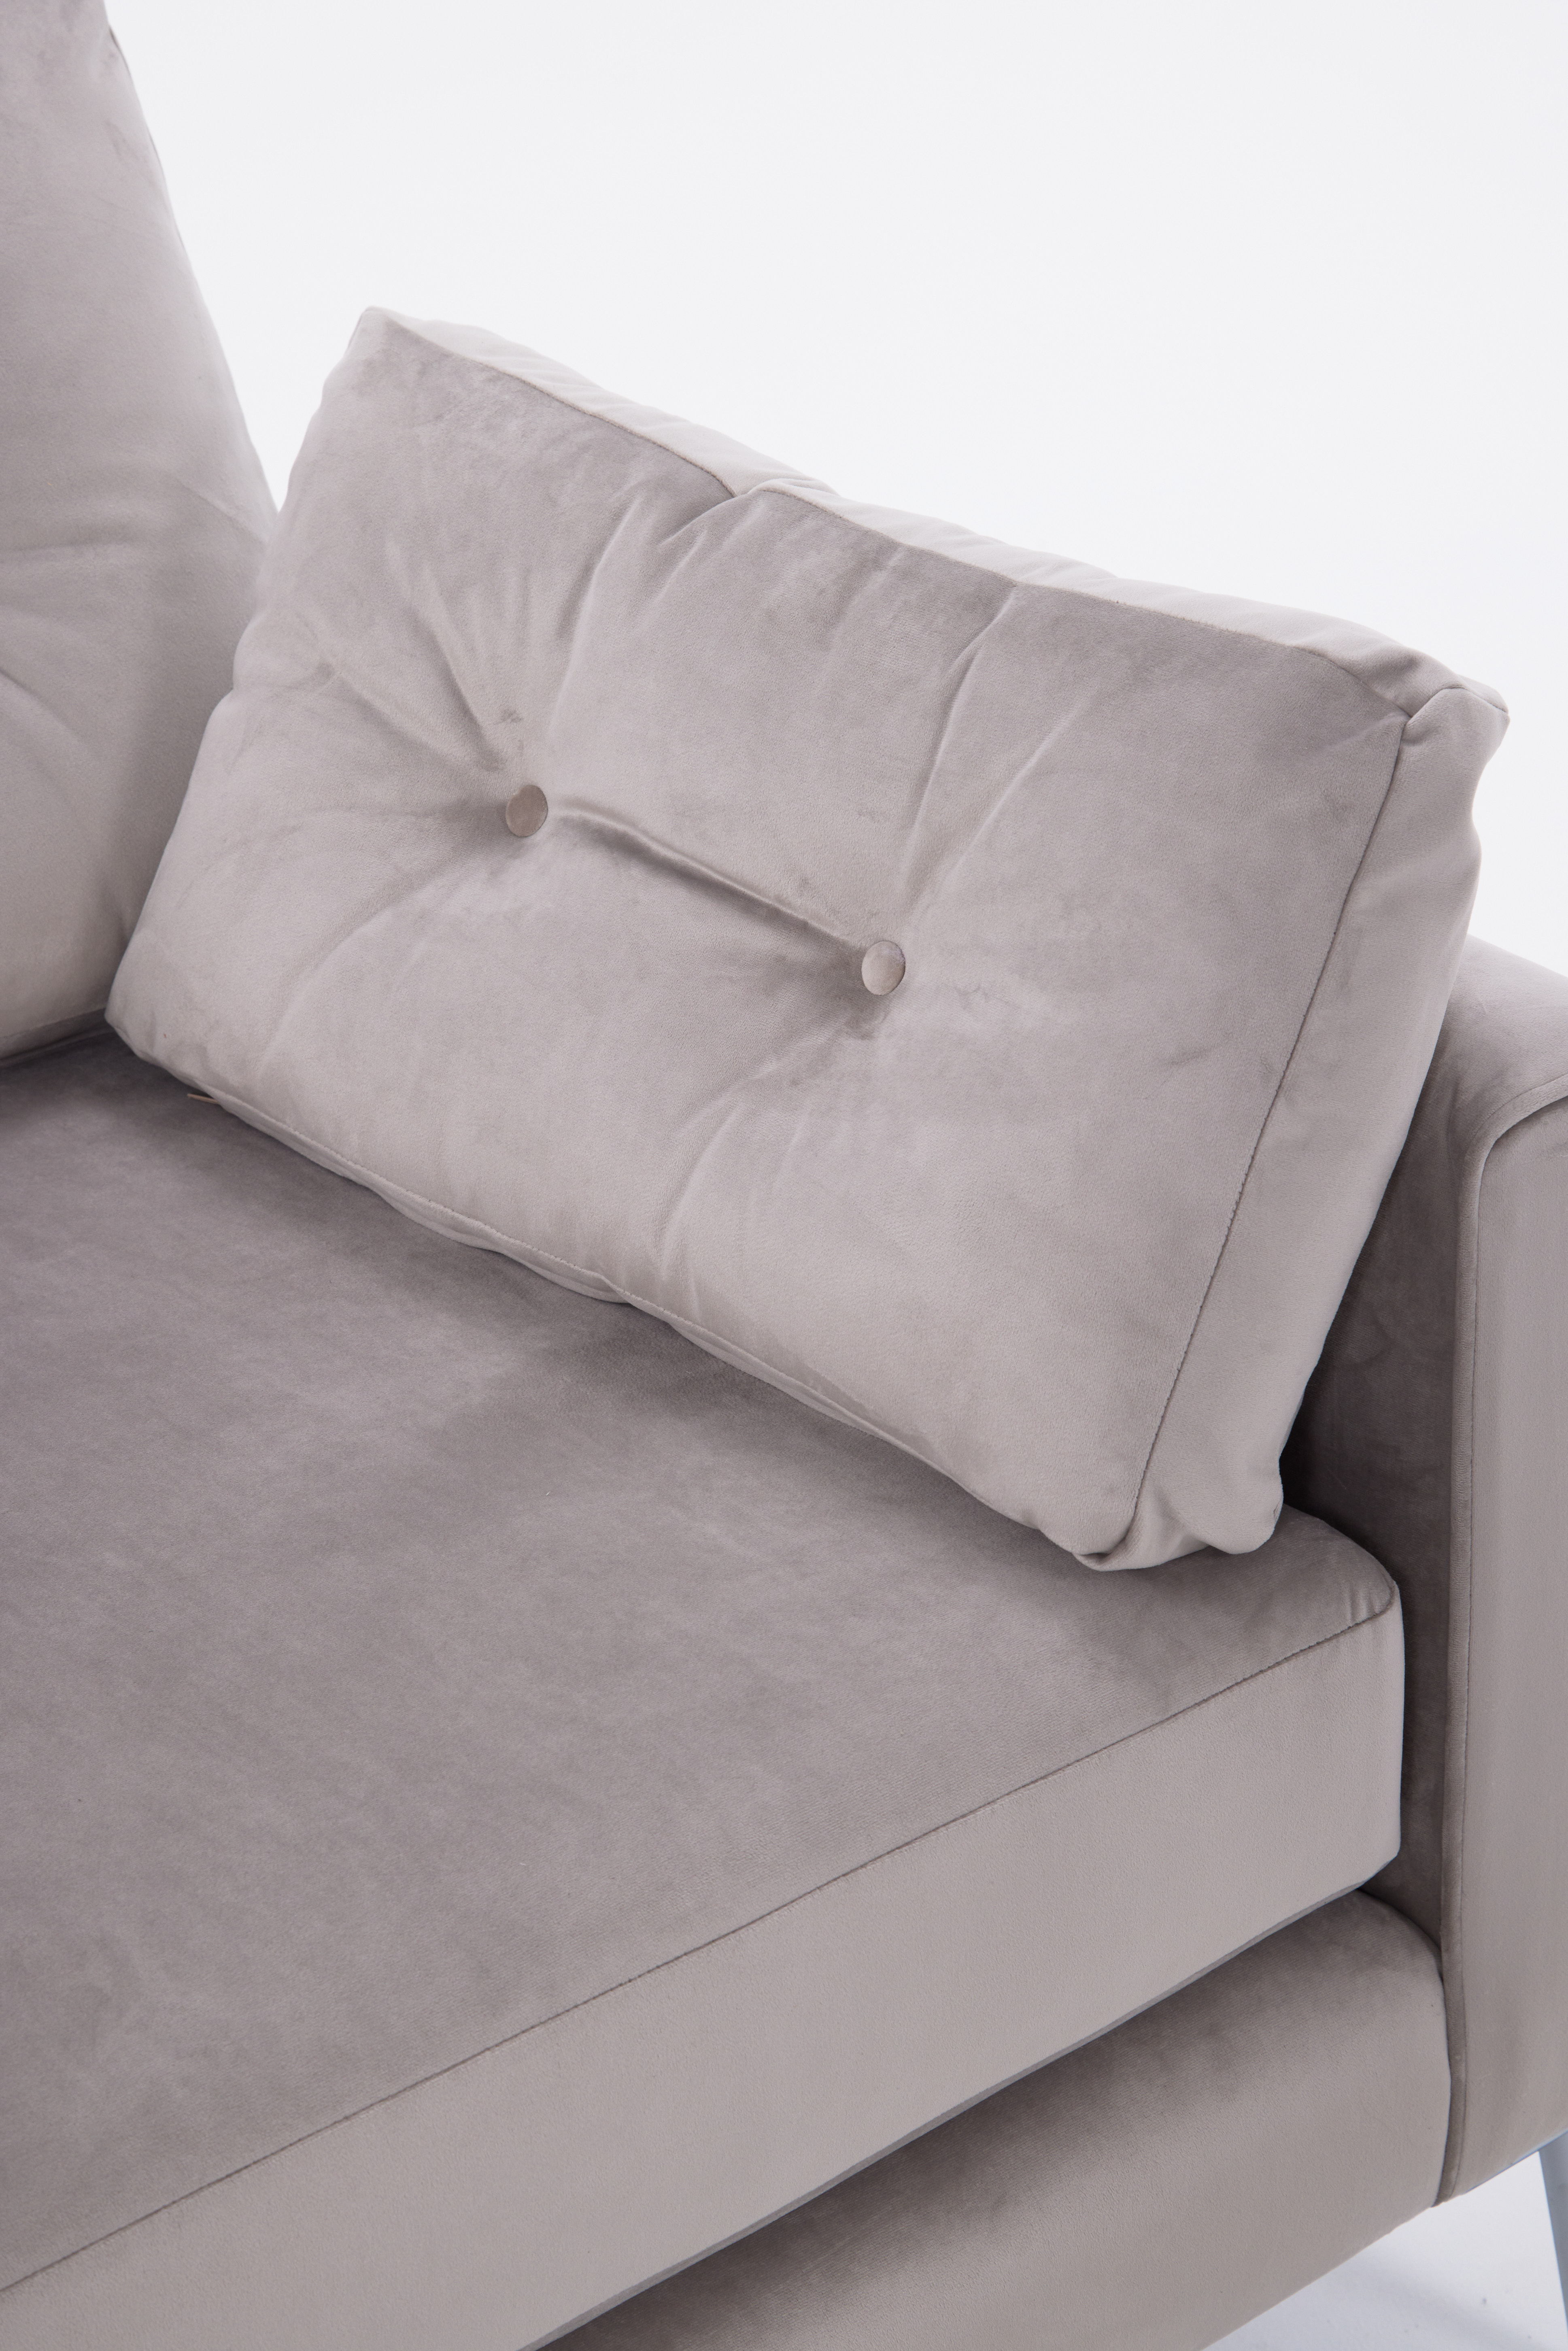 Bari Deluxe 3 Seater Sofa